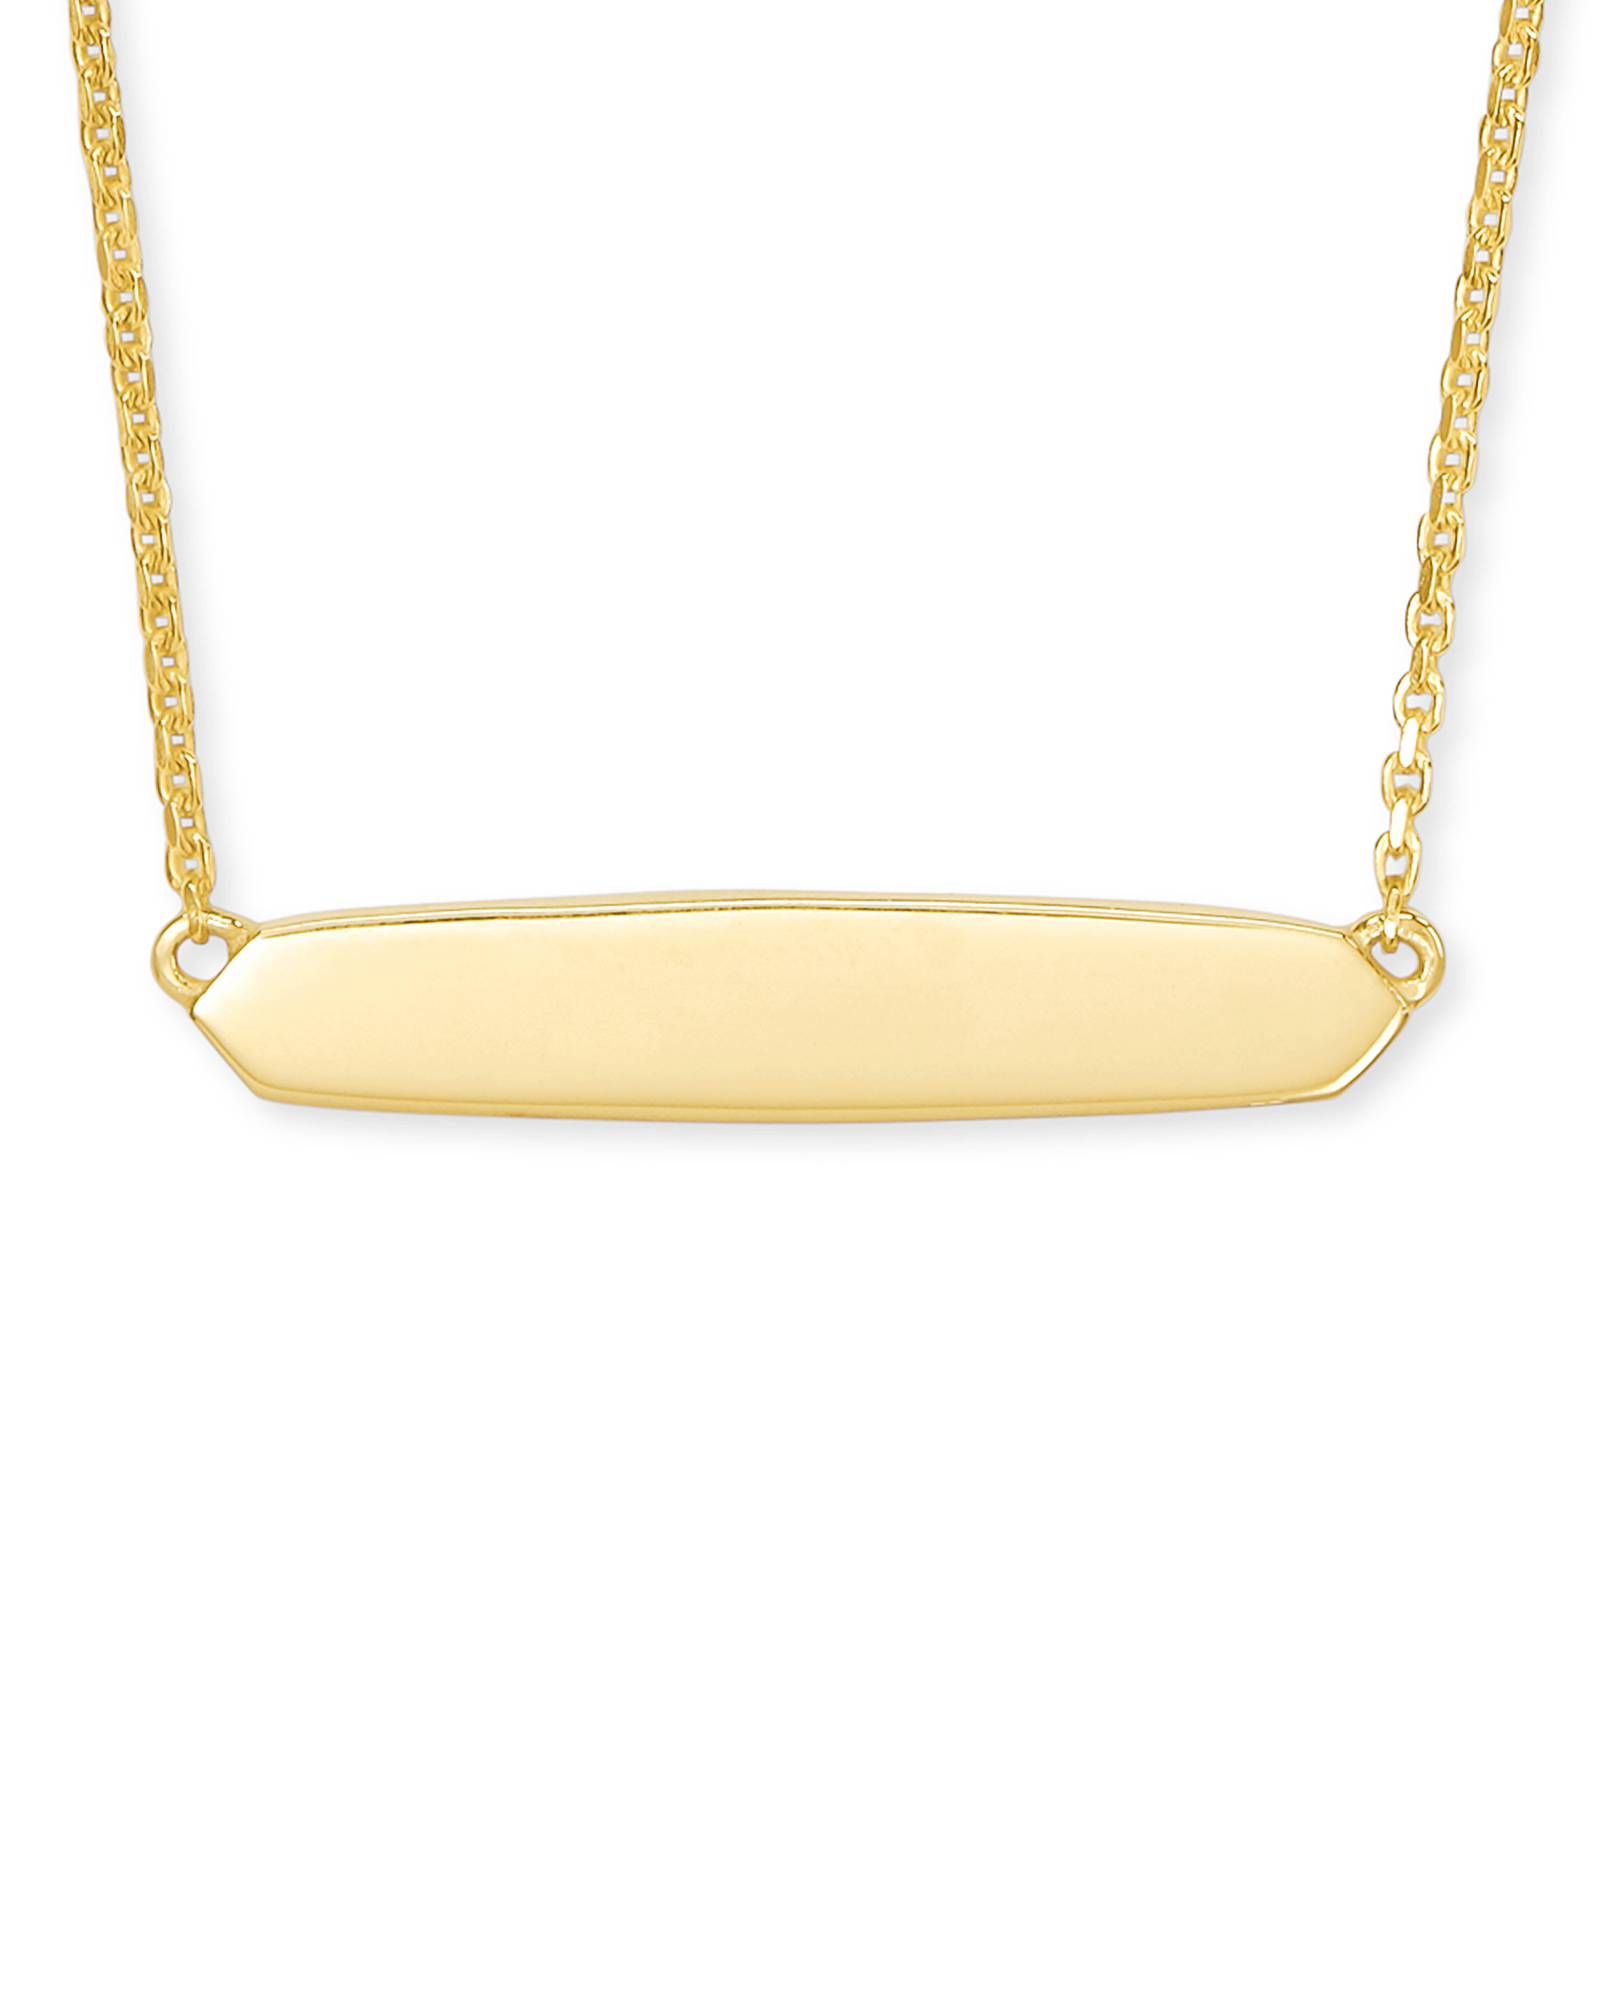 Mattie Bar Pendant Necklace in 18k Gold Vermeil | Kendra Scott | Kendra Scott